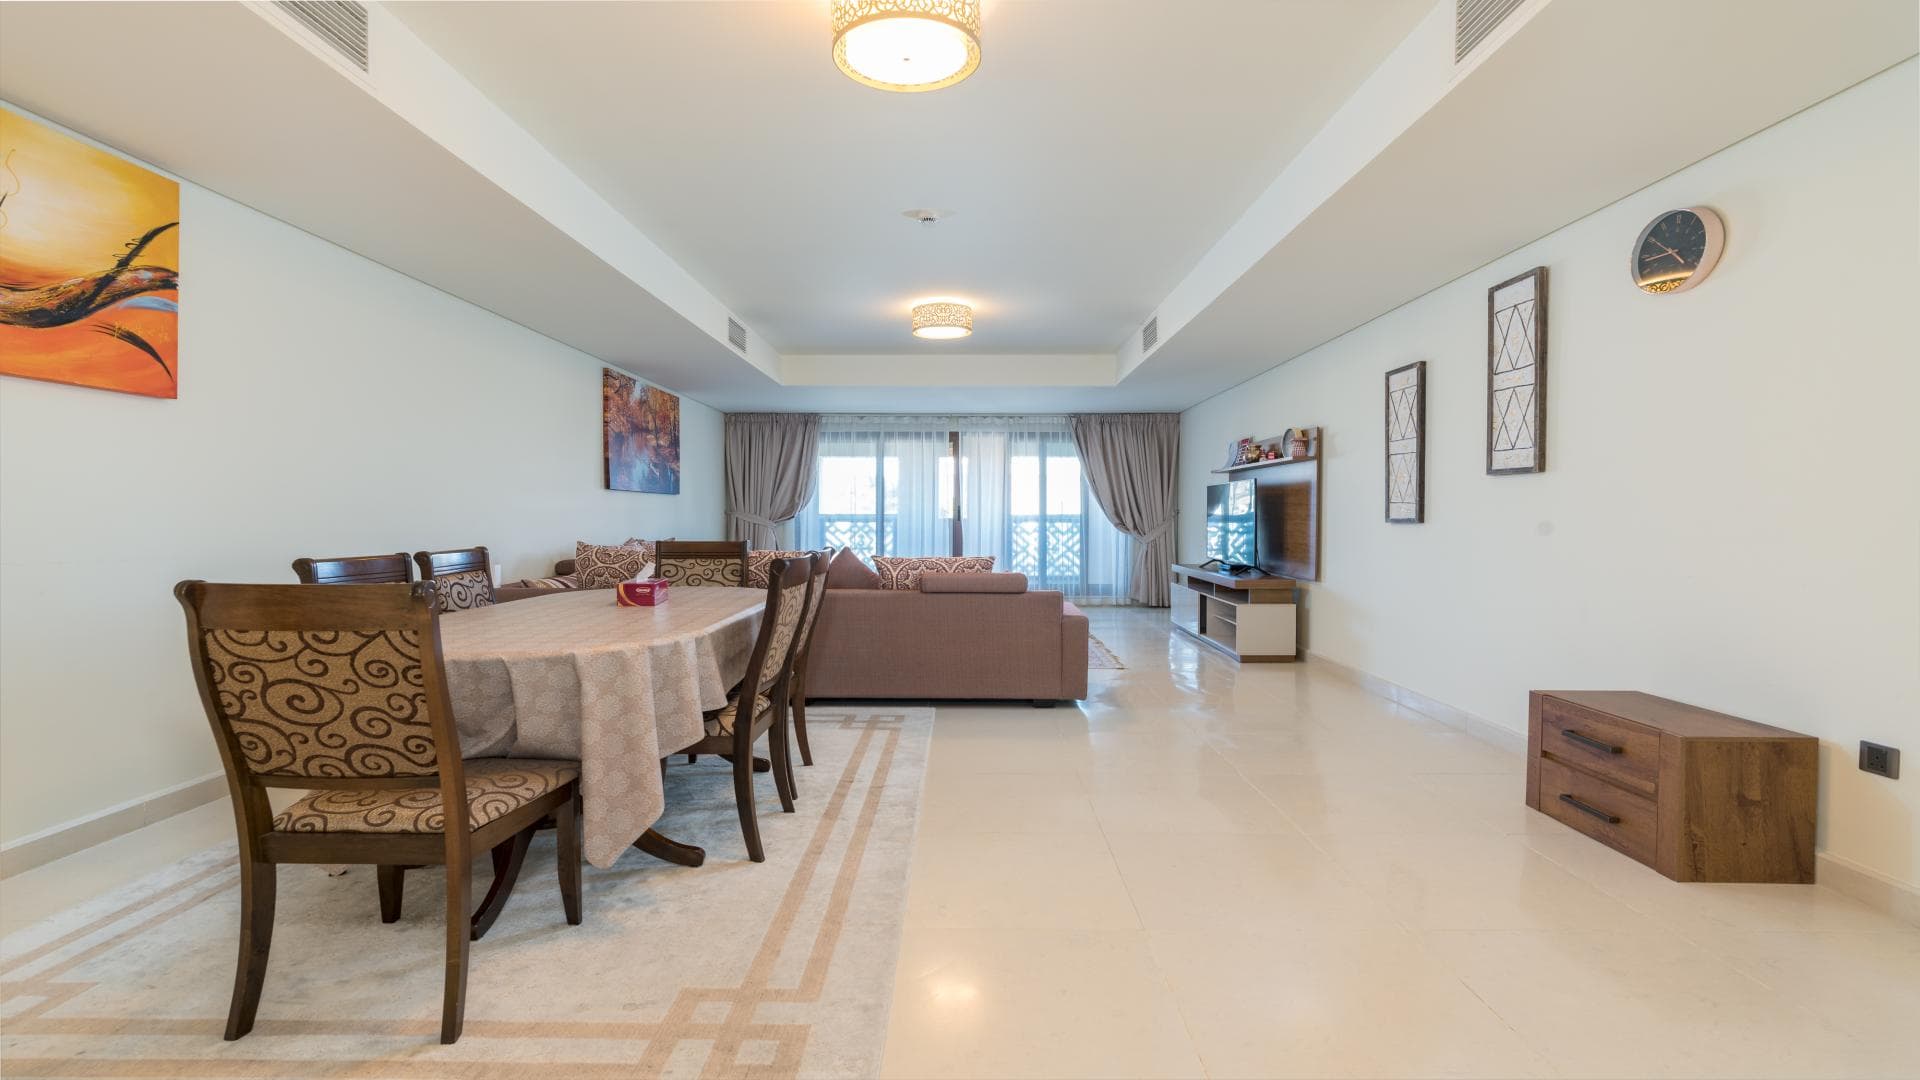 2 Bedroom Apartment For Rent Kingdom Of Sheba Lp19542 1be46629b7426900.jpg